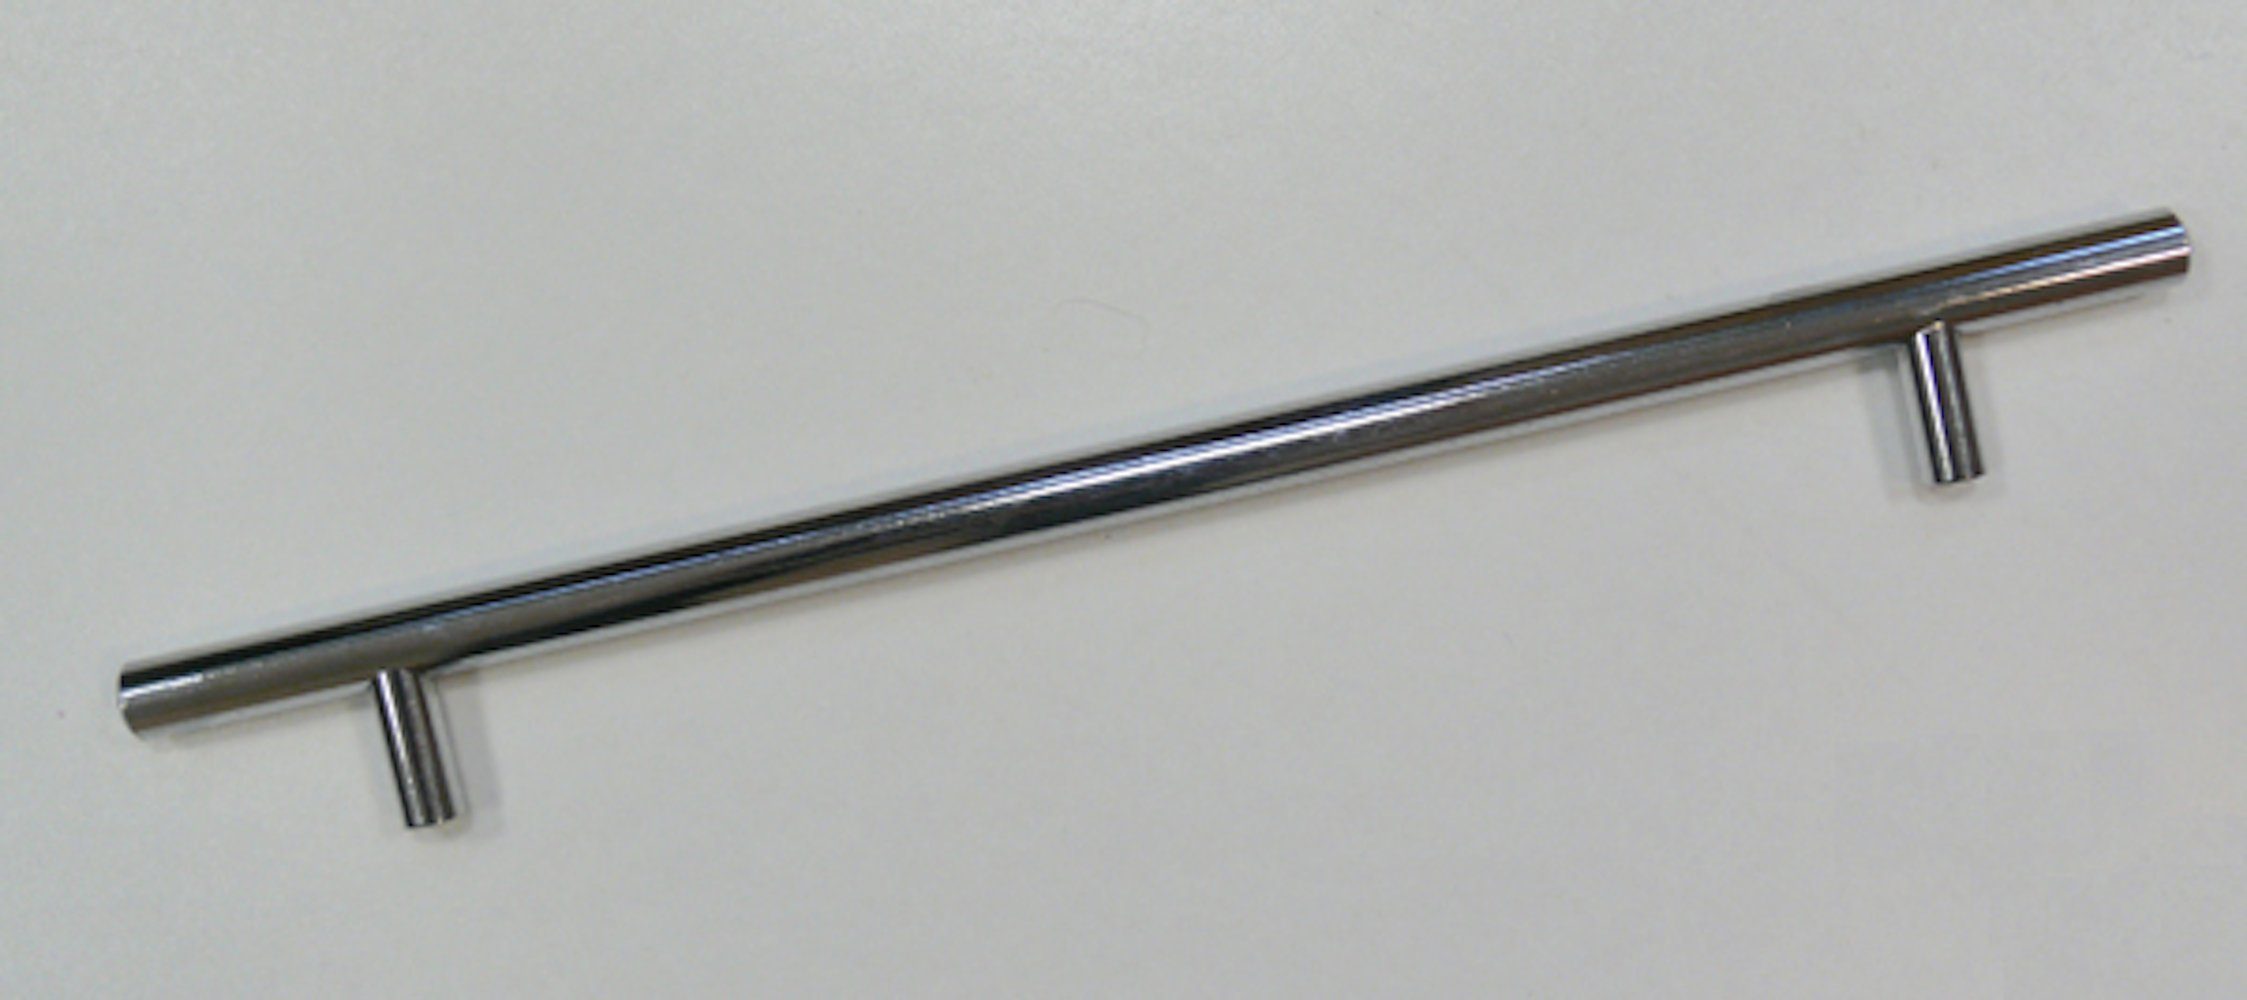 matt Hochfaltklappe Faltlifthängeschrank grey (Kvantum) Front- wählbar und 2-teilige dust Kvantum 90cm Feldmann-Wohnen Korpusfarbe